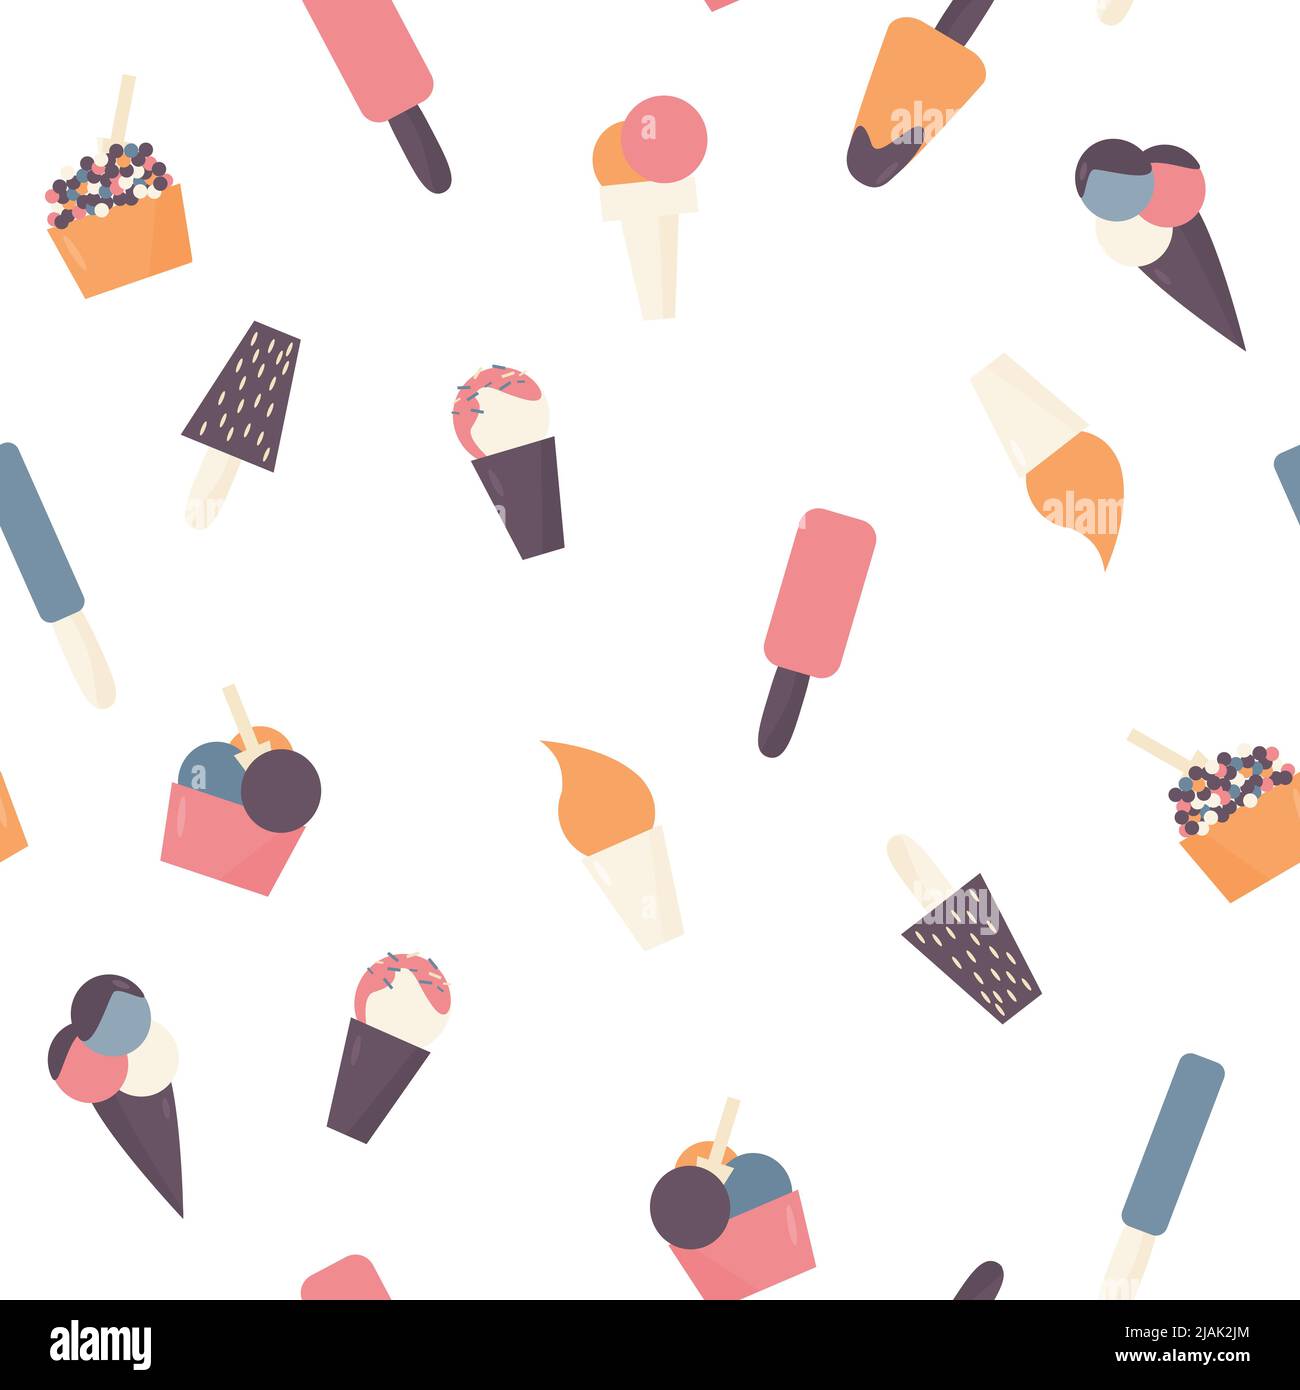 https://c8.alamy.com/comp/2JAK2JM/seamless-pattern-with-different-kinds-of-ice-cream-vector-illustration-flat-design-2JAK2JM.jpg